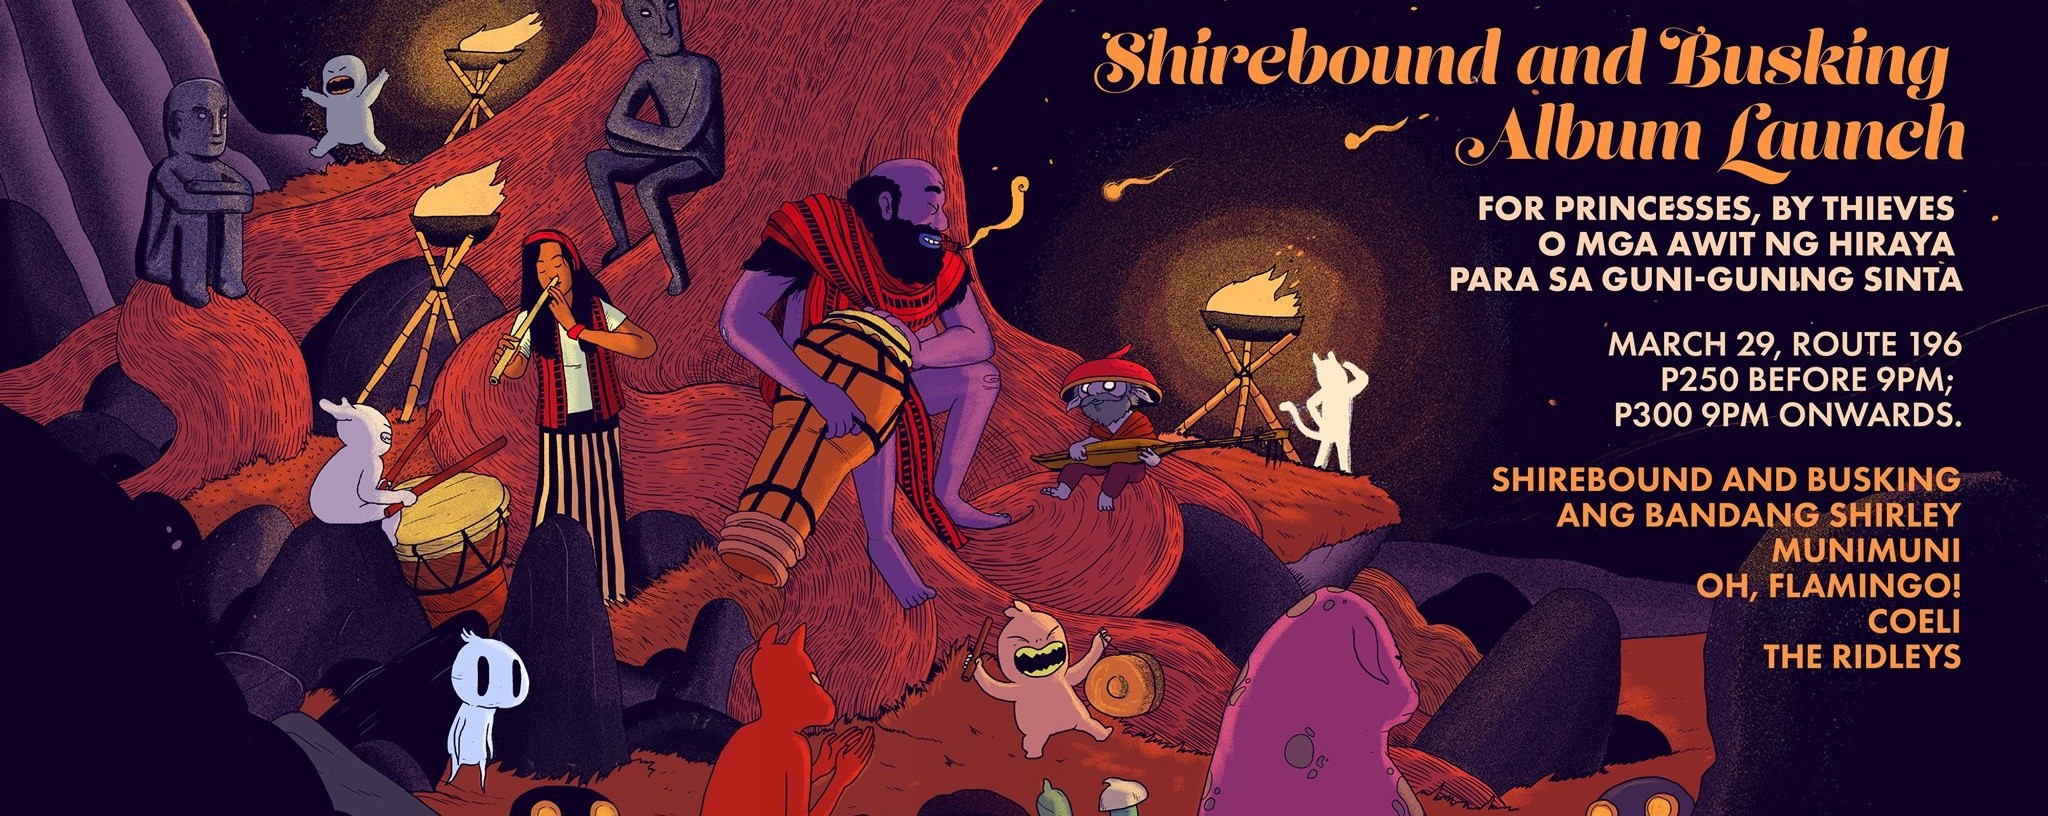 Shirebound and Busking ALBUM Launch